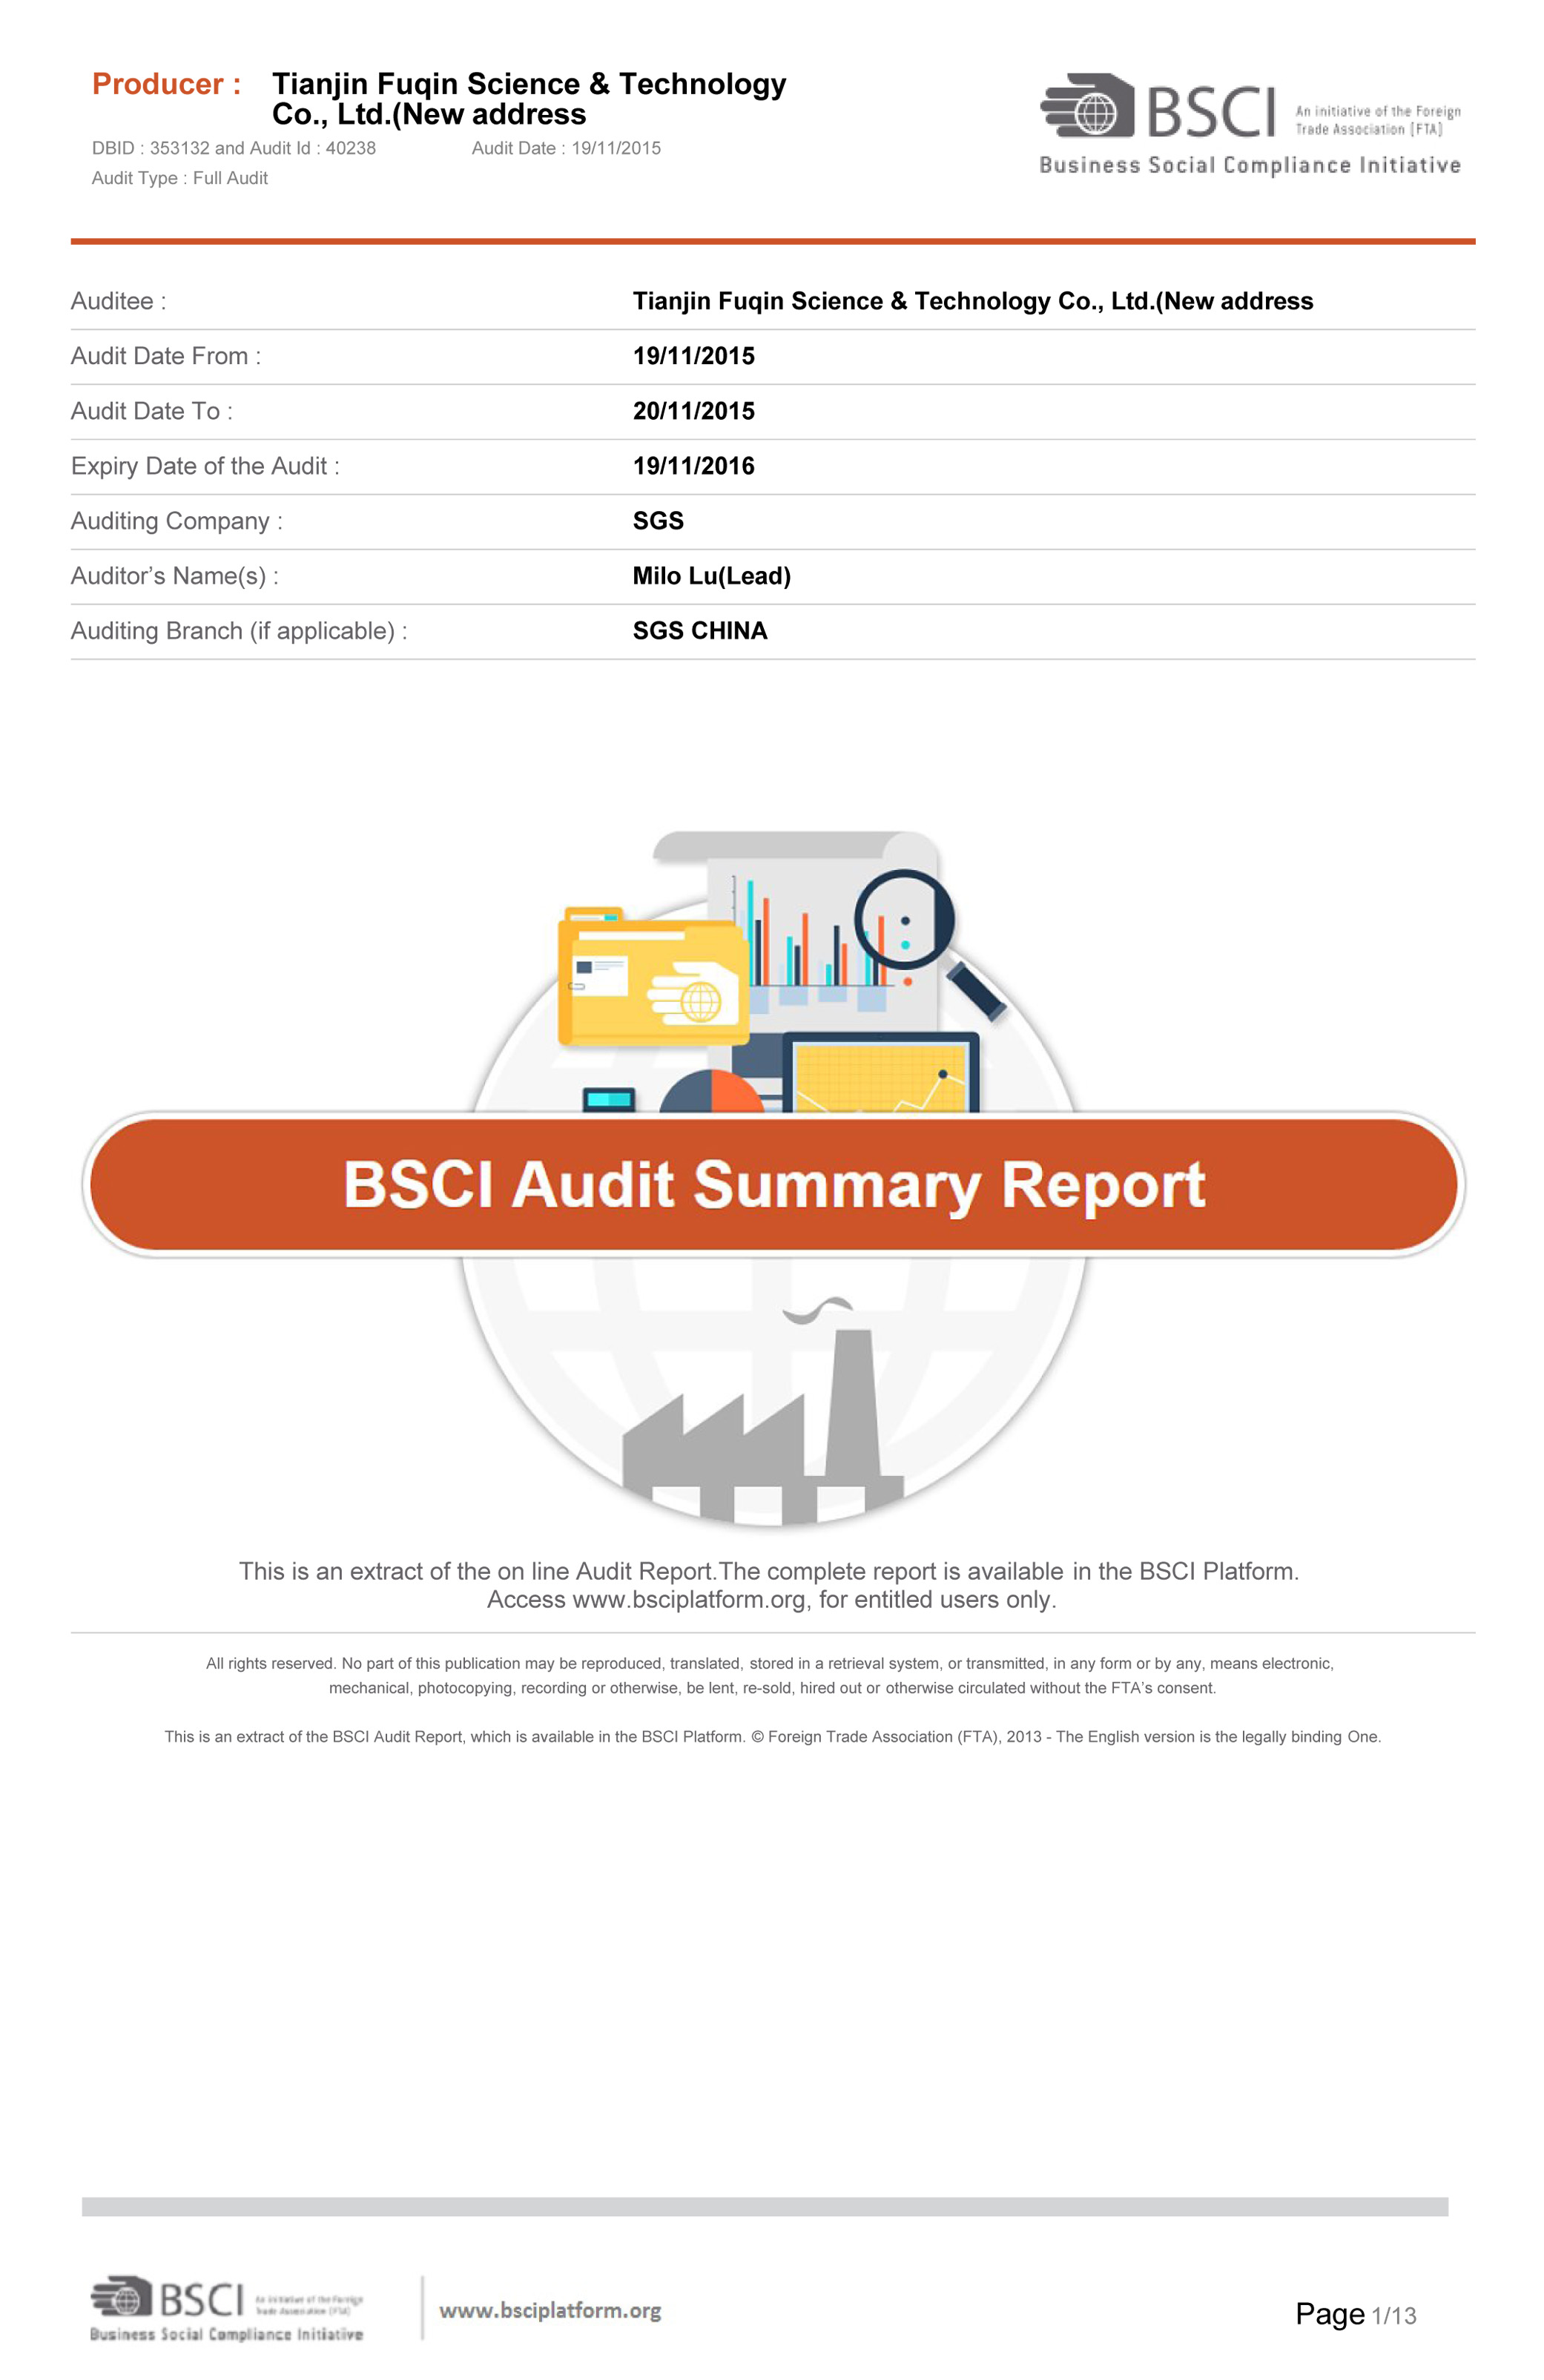 BSCI Report